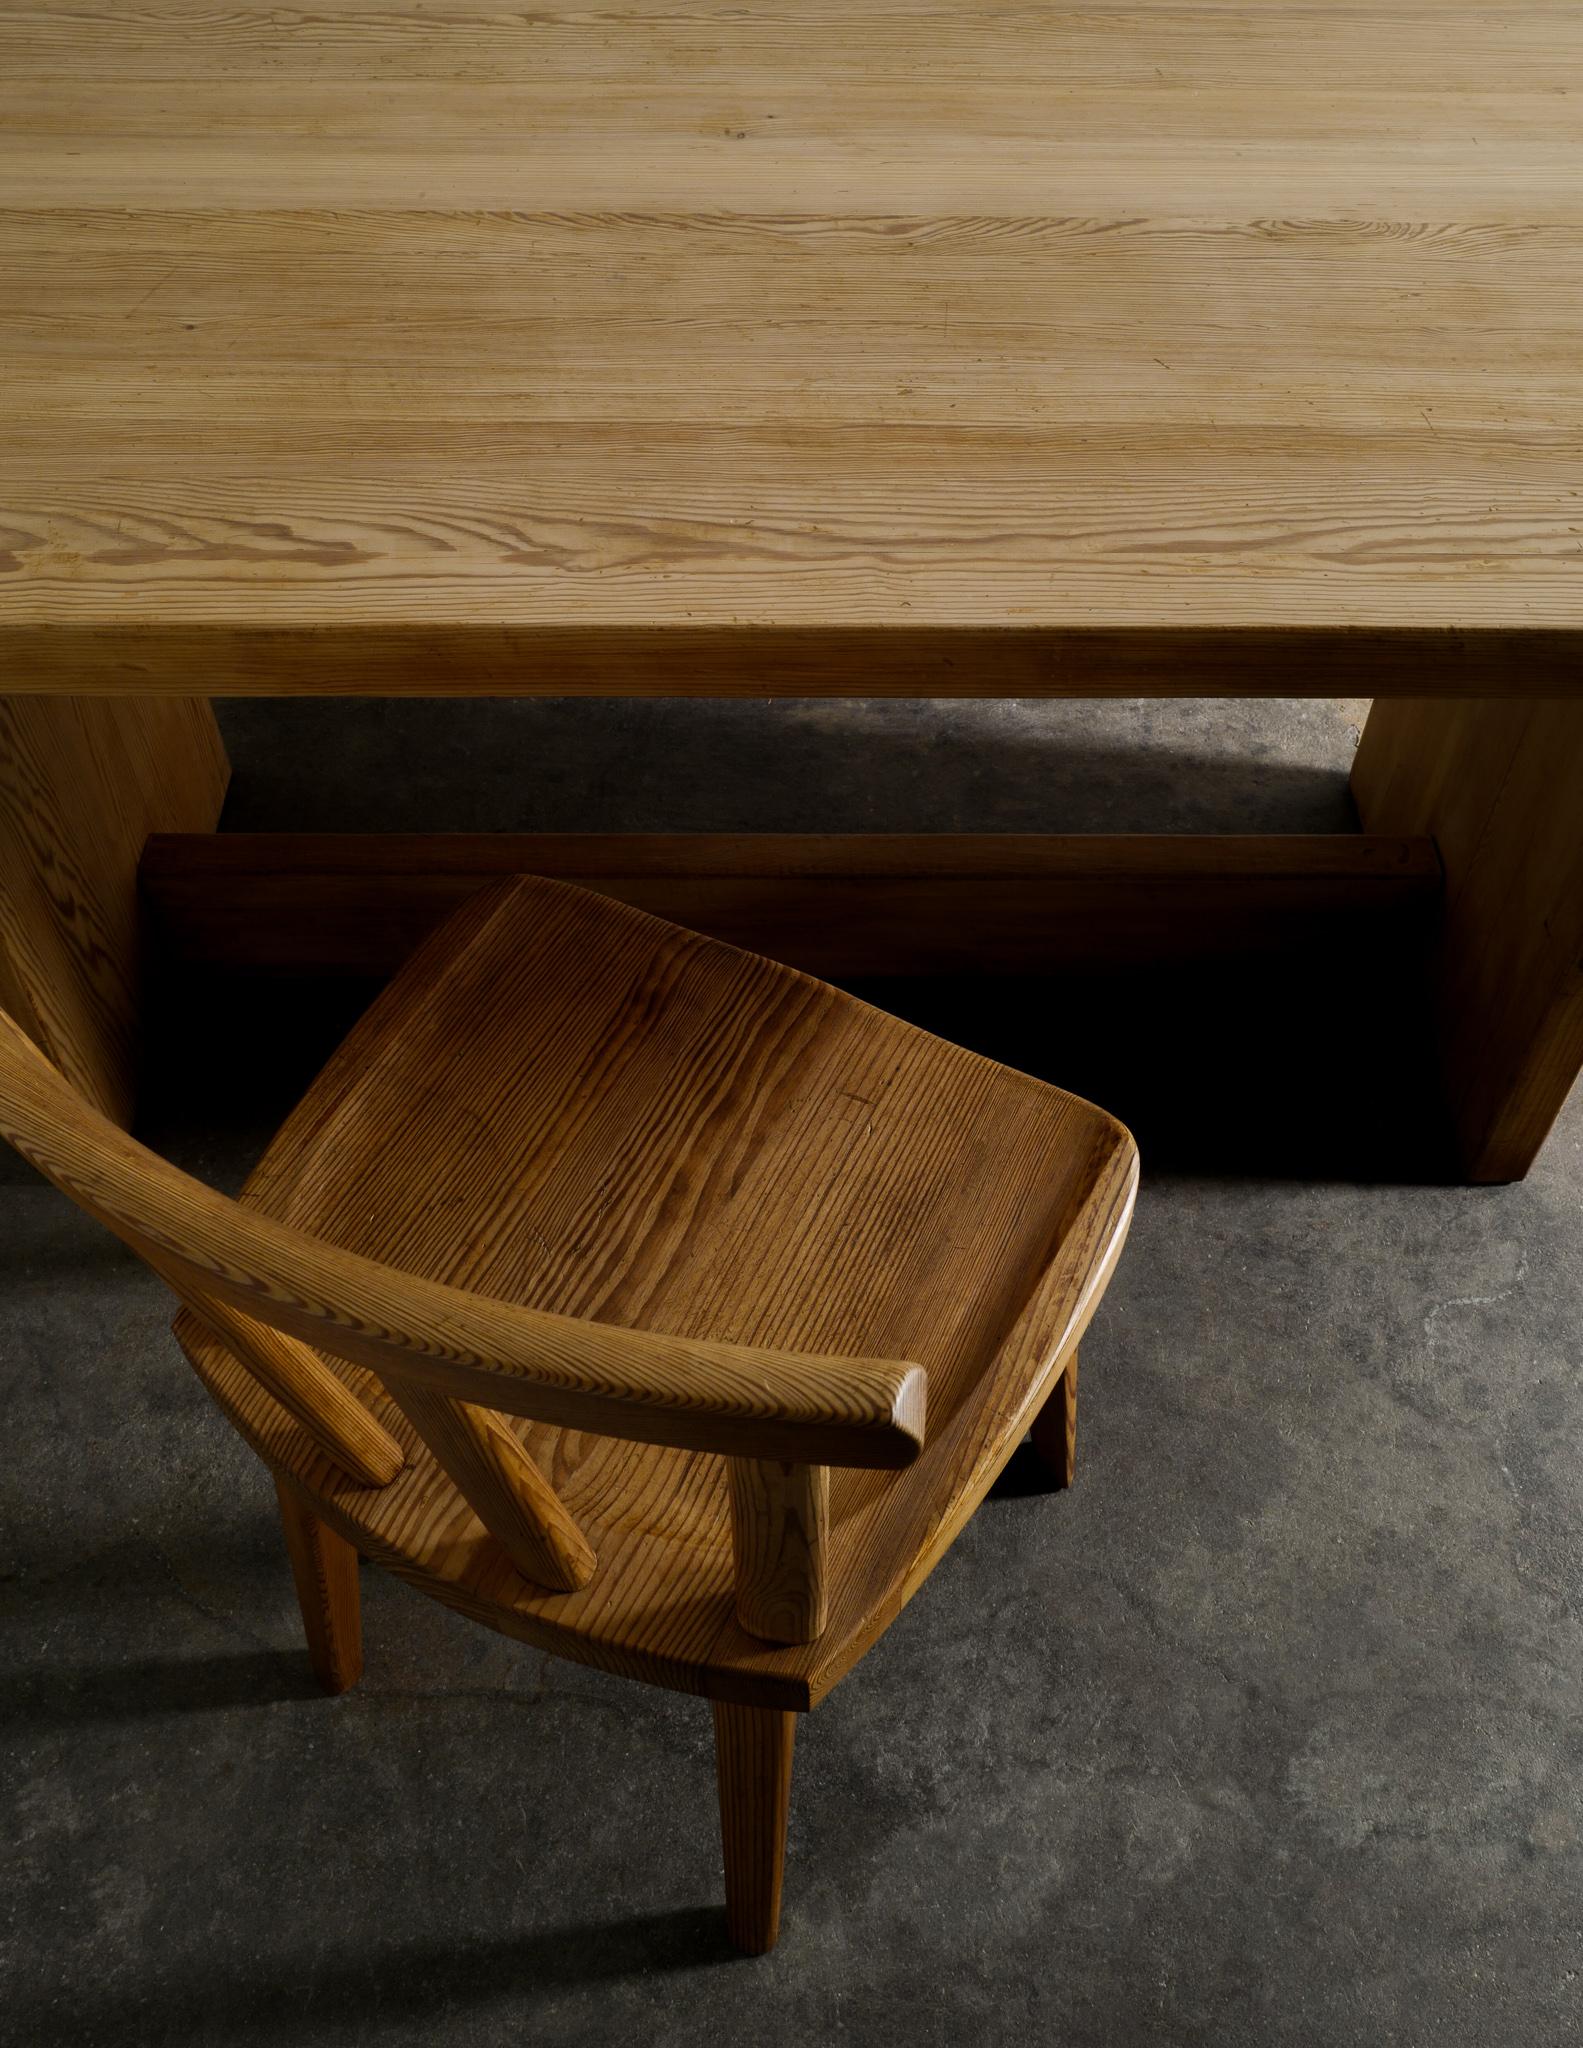 Axel Einar Hjorth Table & Chair Produced by Nordiska Kompaniet, Sweden, 1930s 5